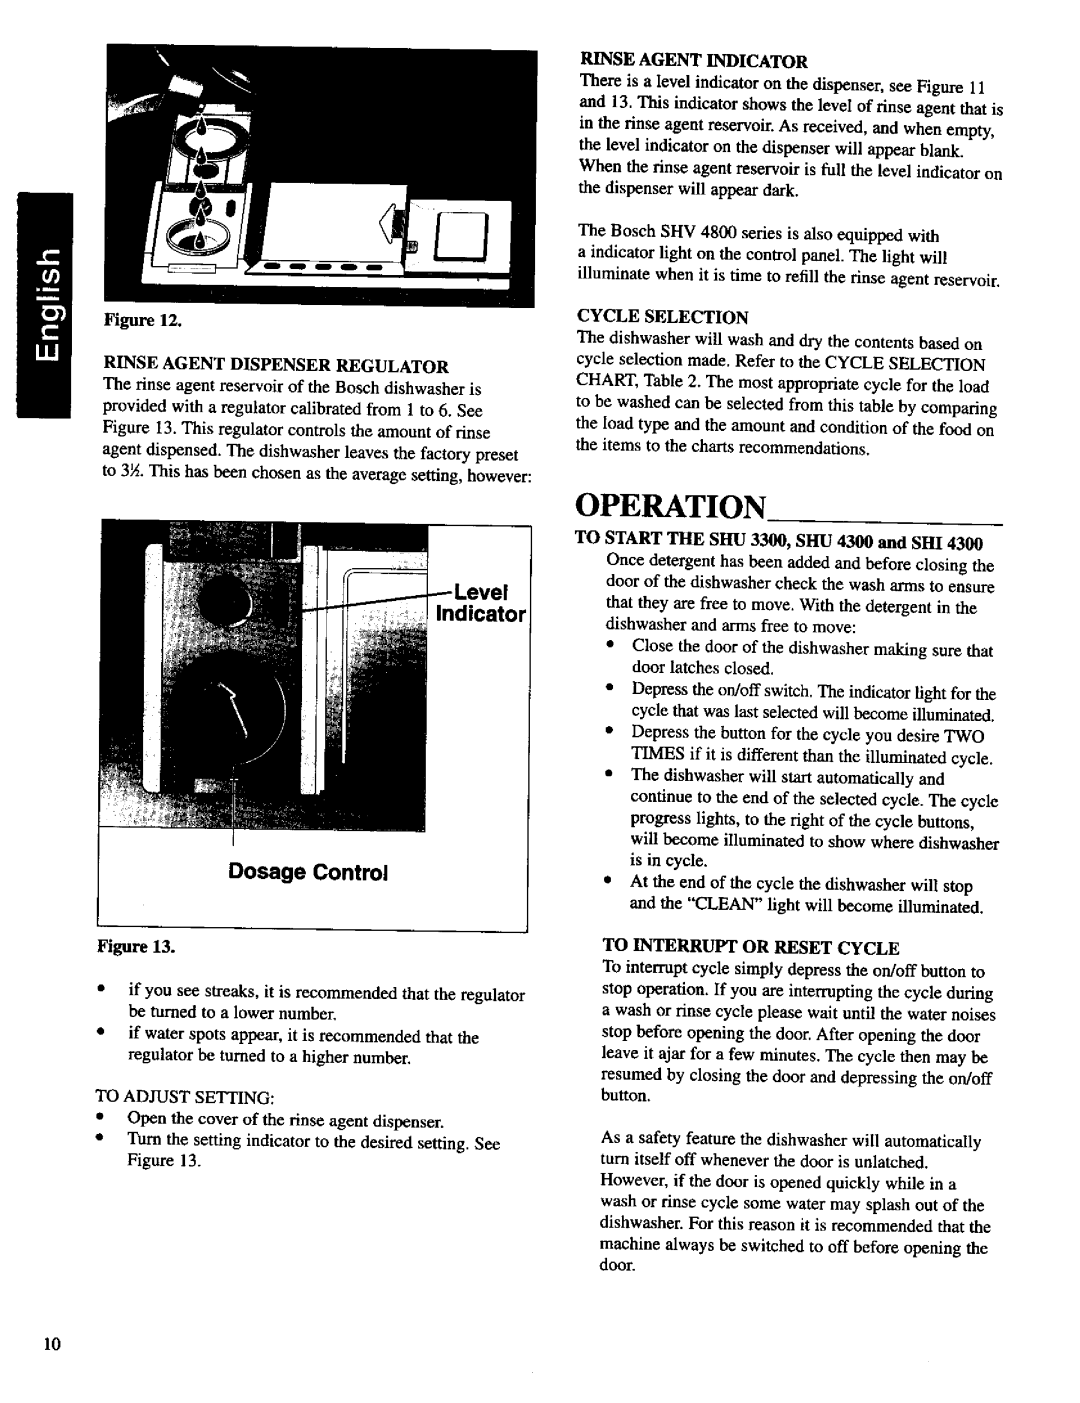 Bosch Appliances SHU 9900, SHU 4300 important safety instructions Operation, Indicator Dosage Control 